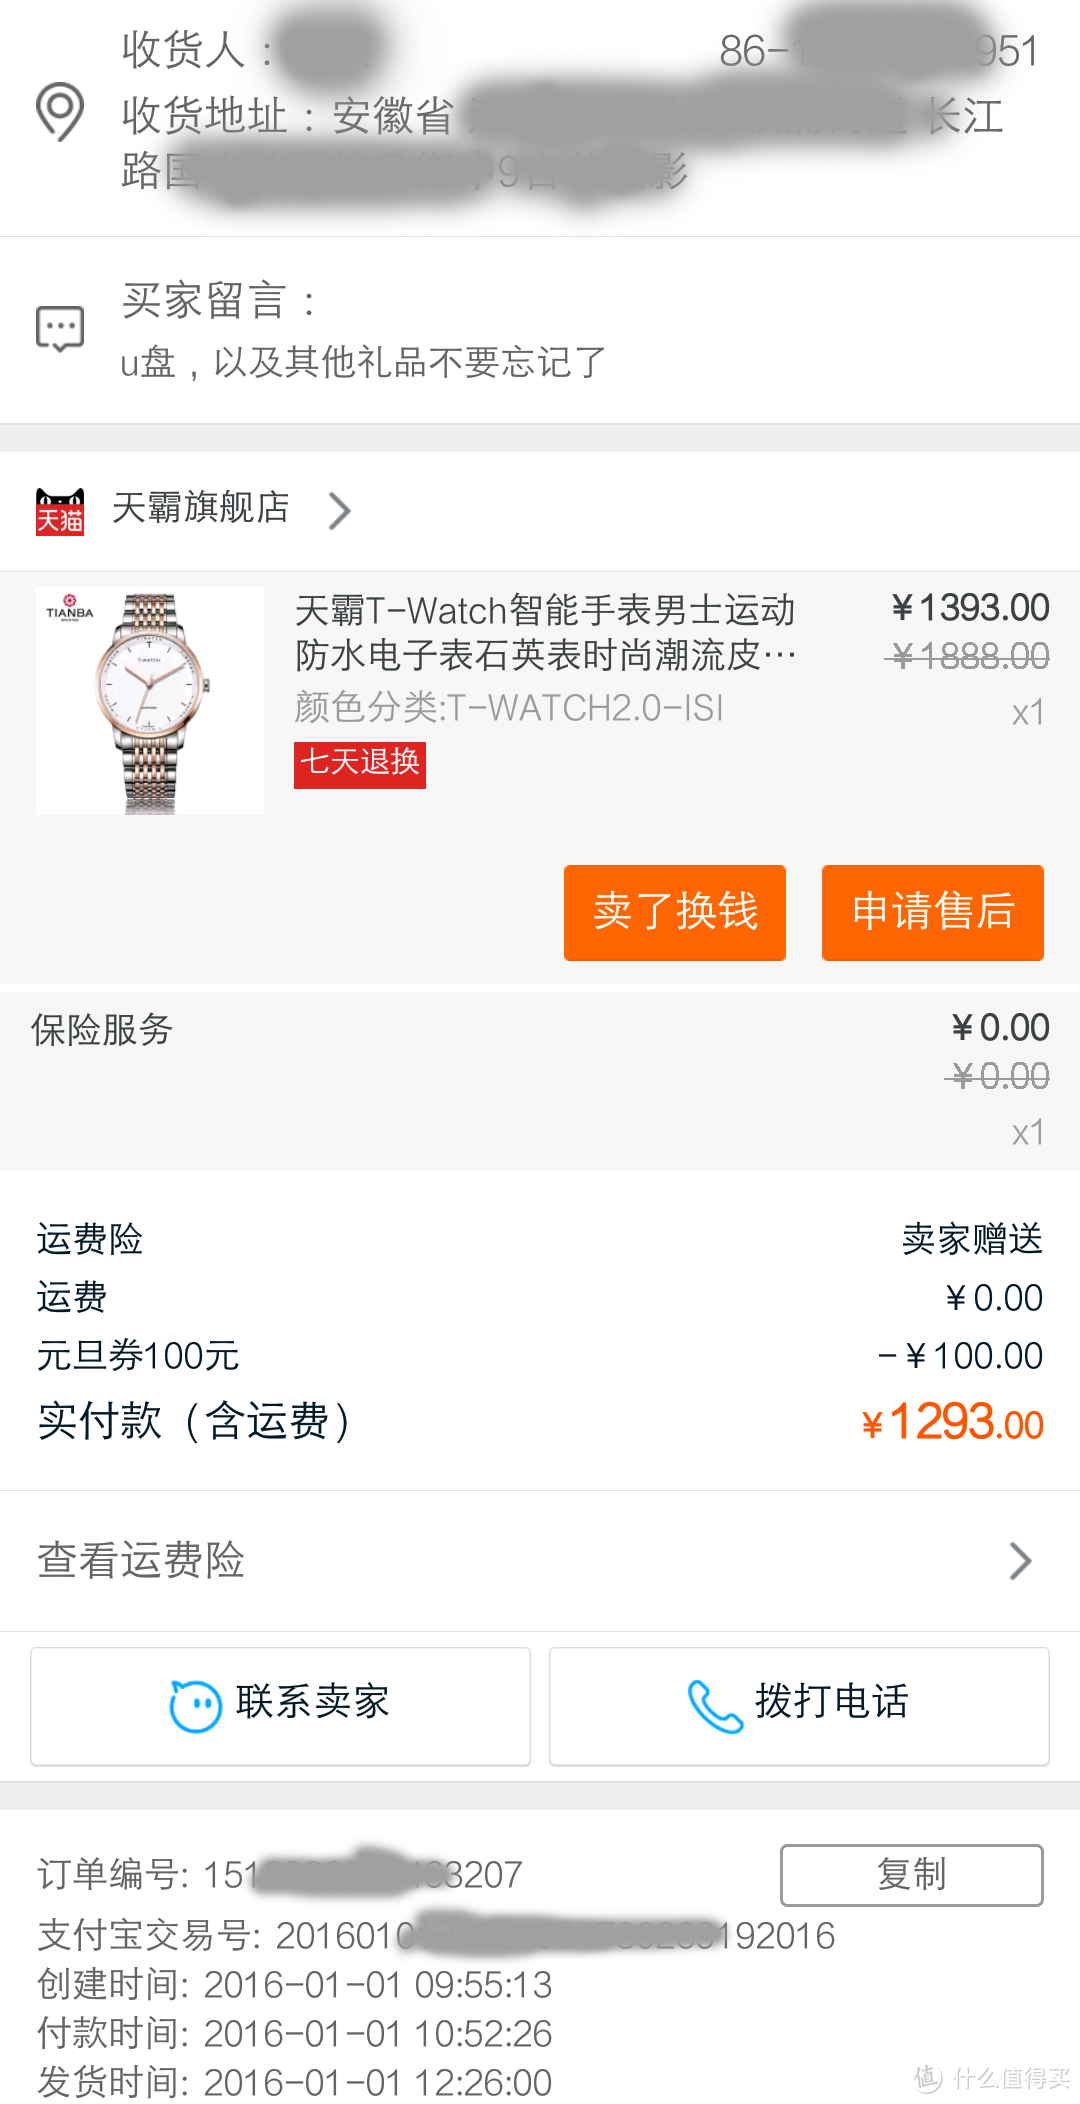 TIANBA 天霸 T-watch 智能手表 使用简测